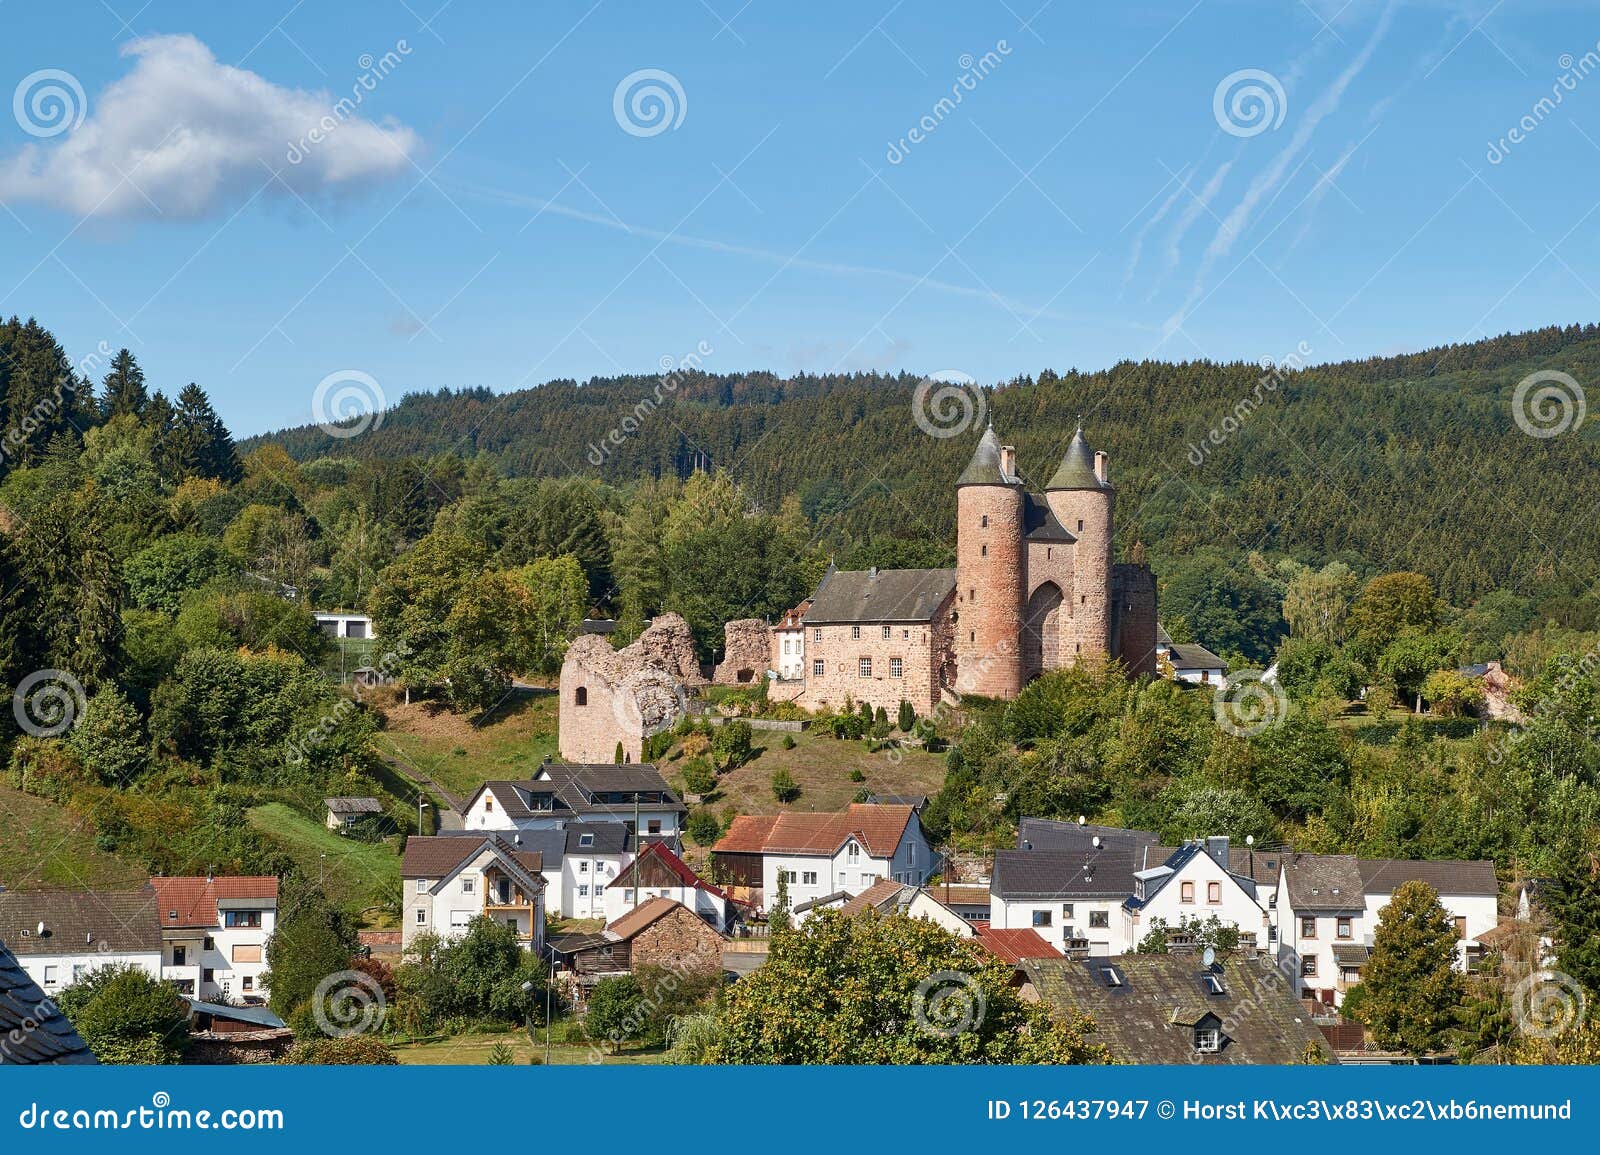 gerolstein germany tourism